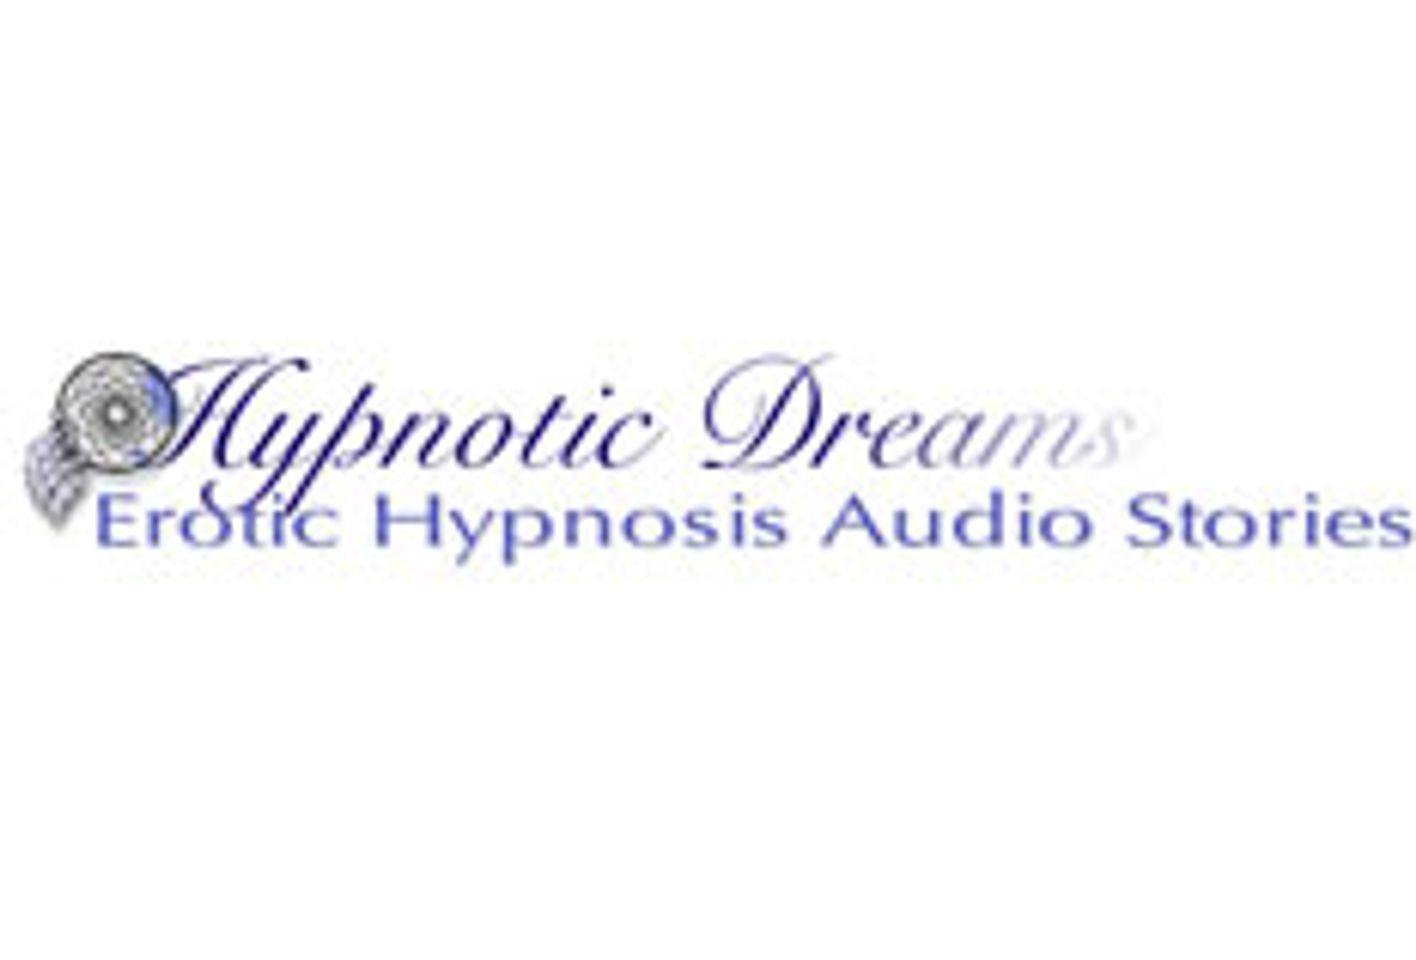 Hypnotic Dreams' Daniel A to Guest on 'Sex With Jaiya Ma' on VoiceAmerica.com